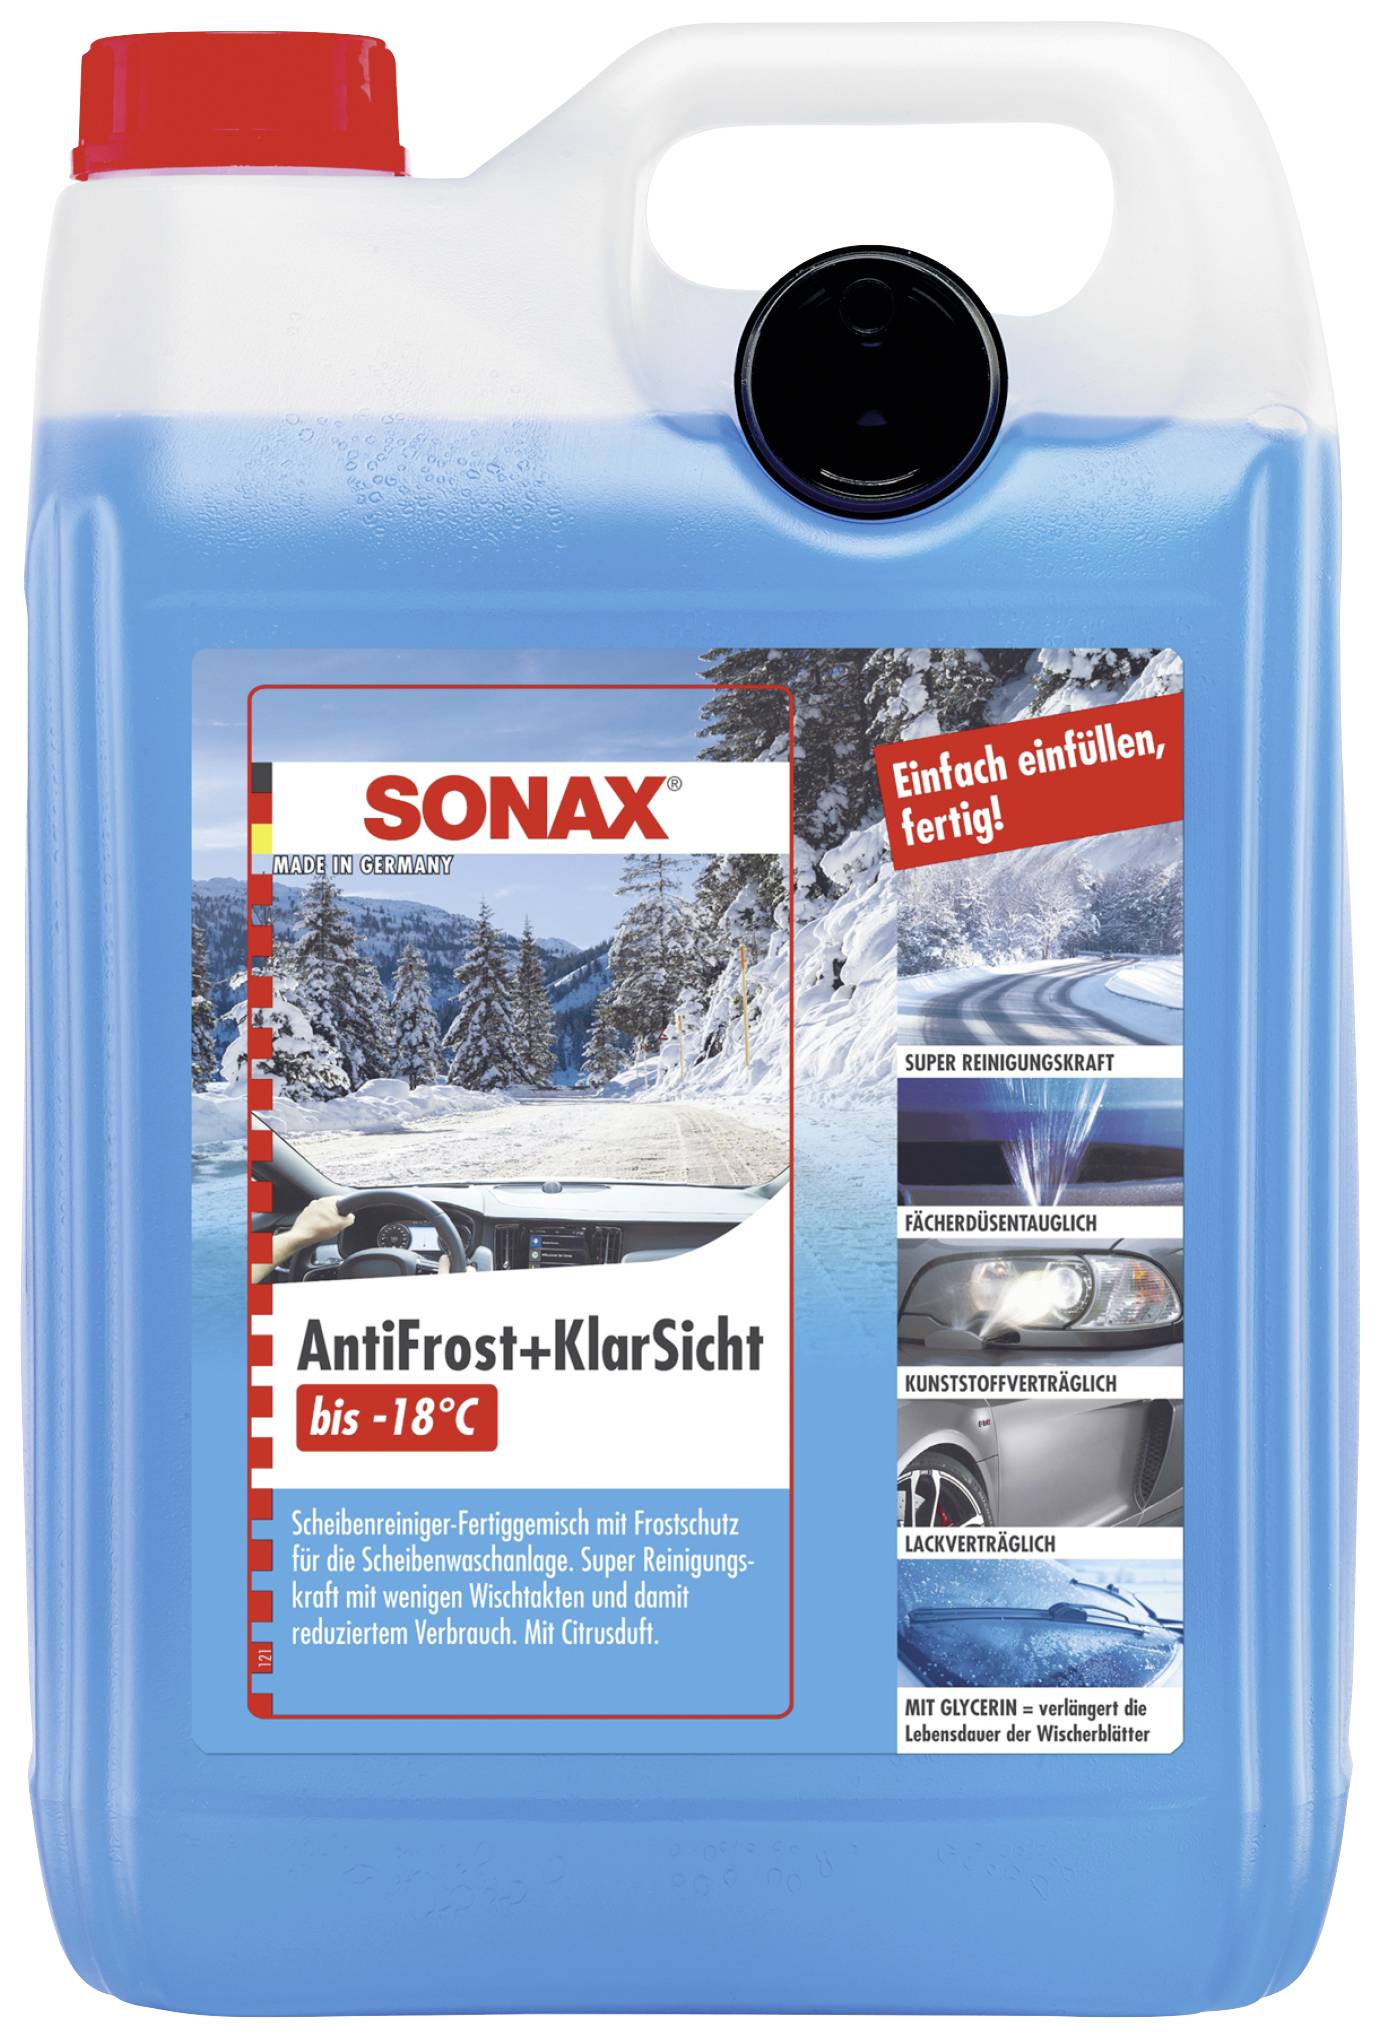 Sonax AntiFrost + KlarSicht 134500 Window antifreeze 5 l